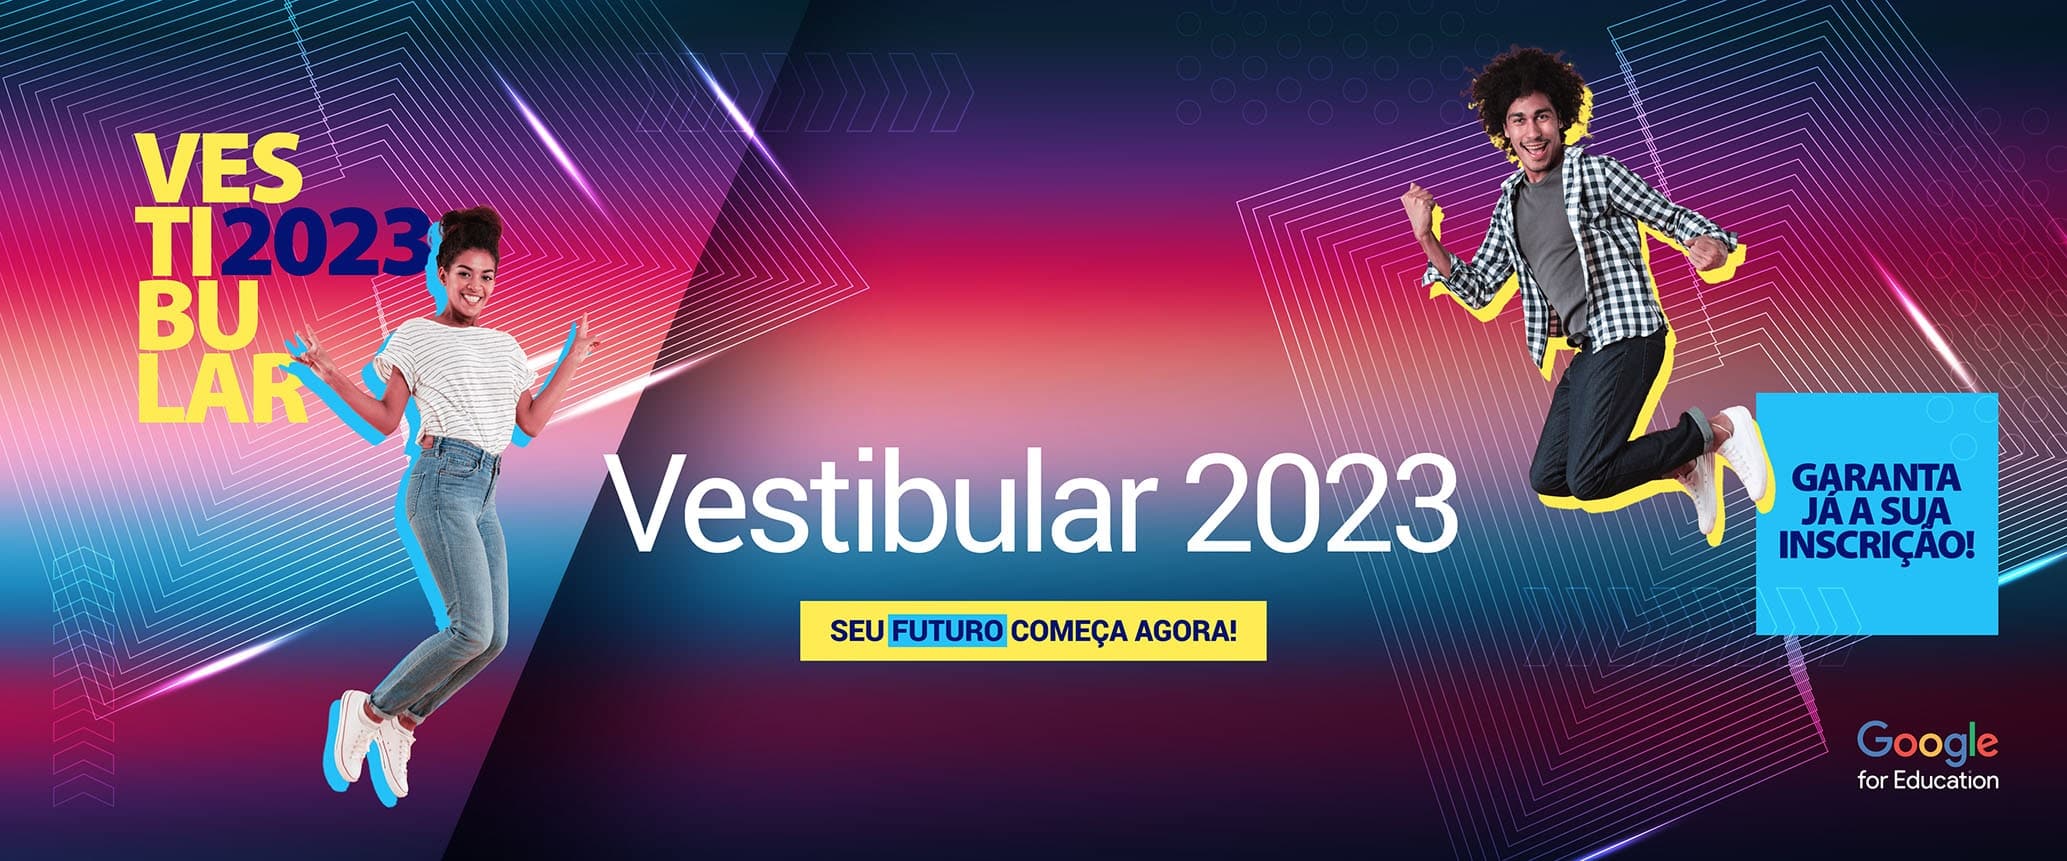 Banner_Vestibular 2023_neutro-min